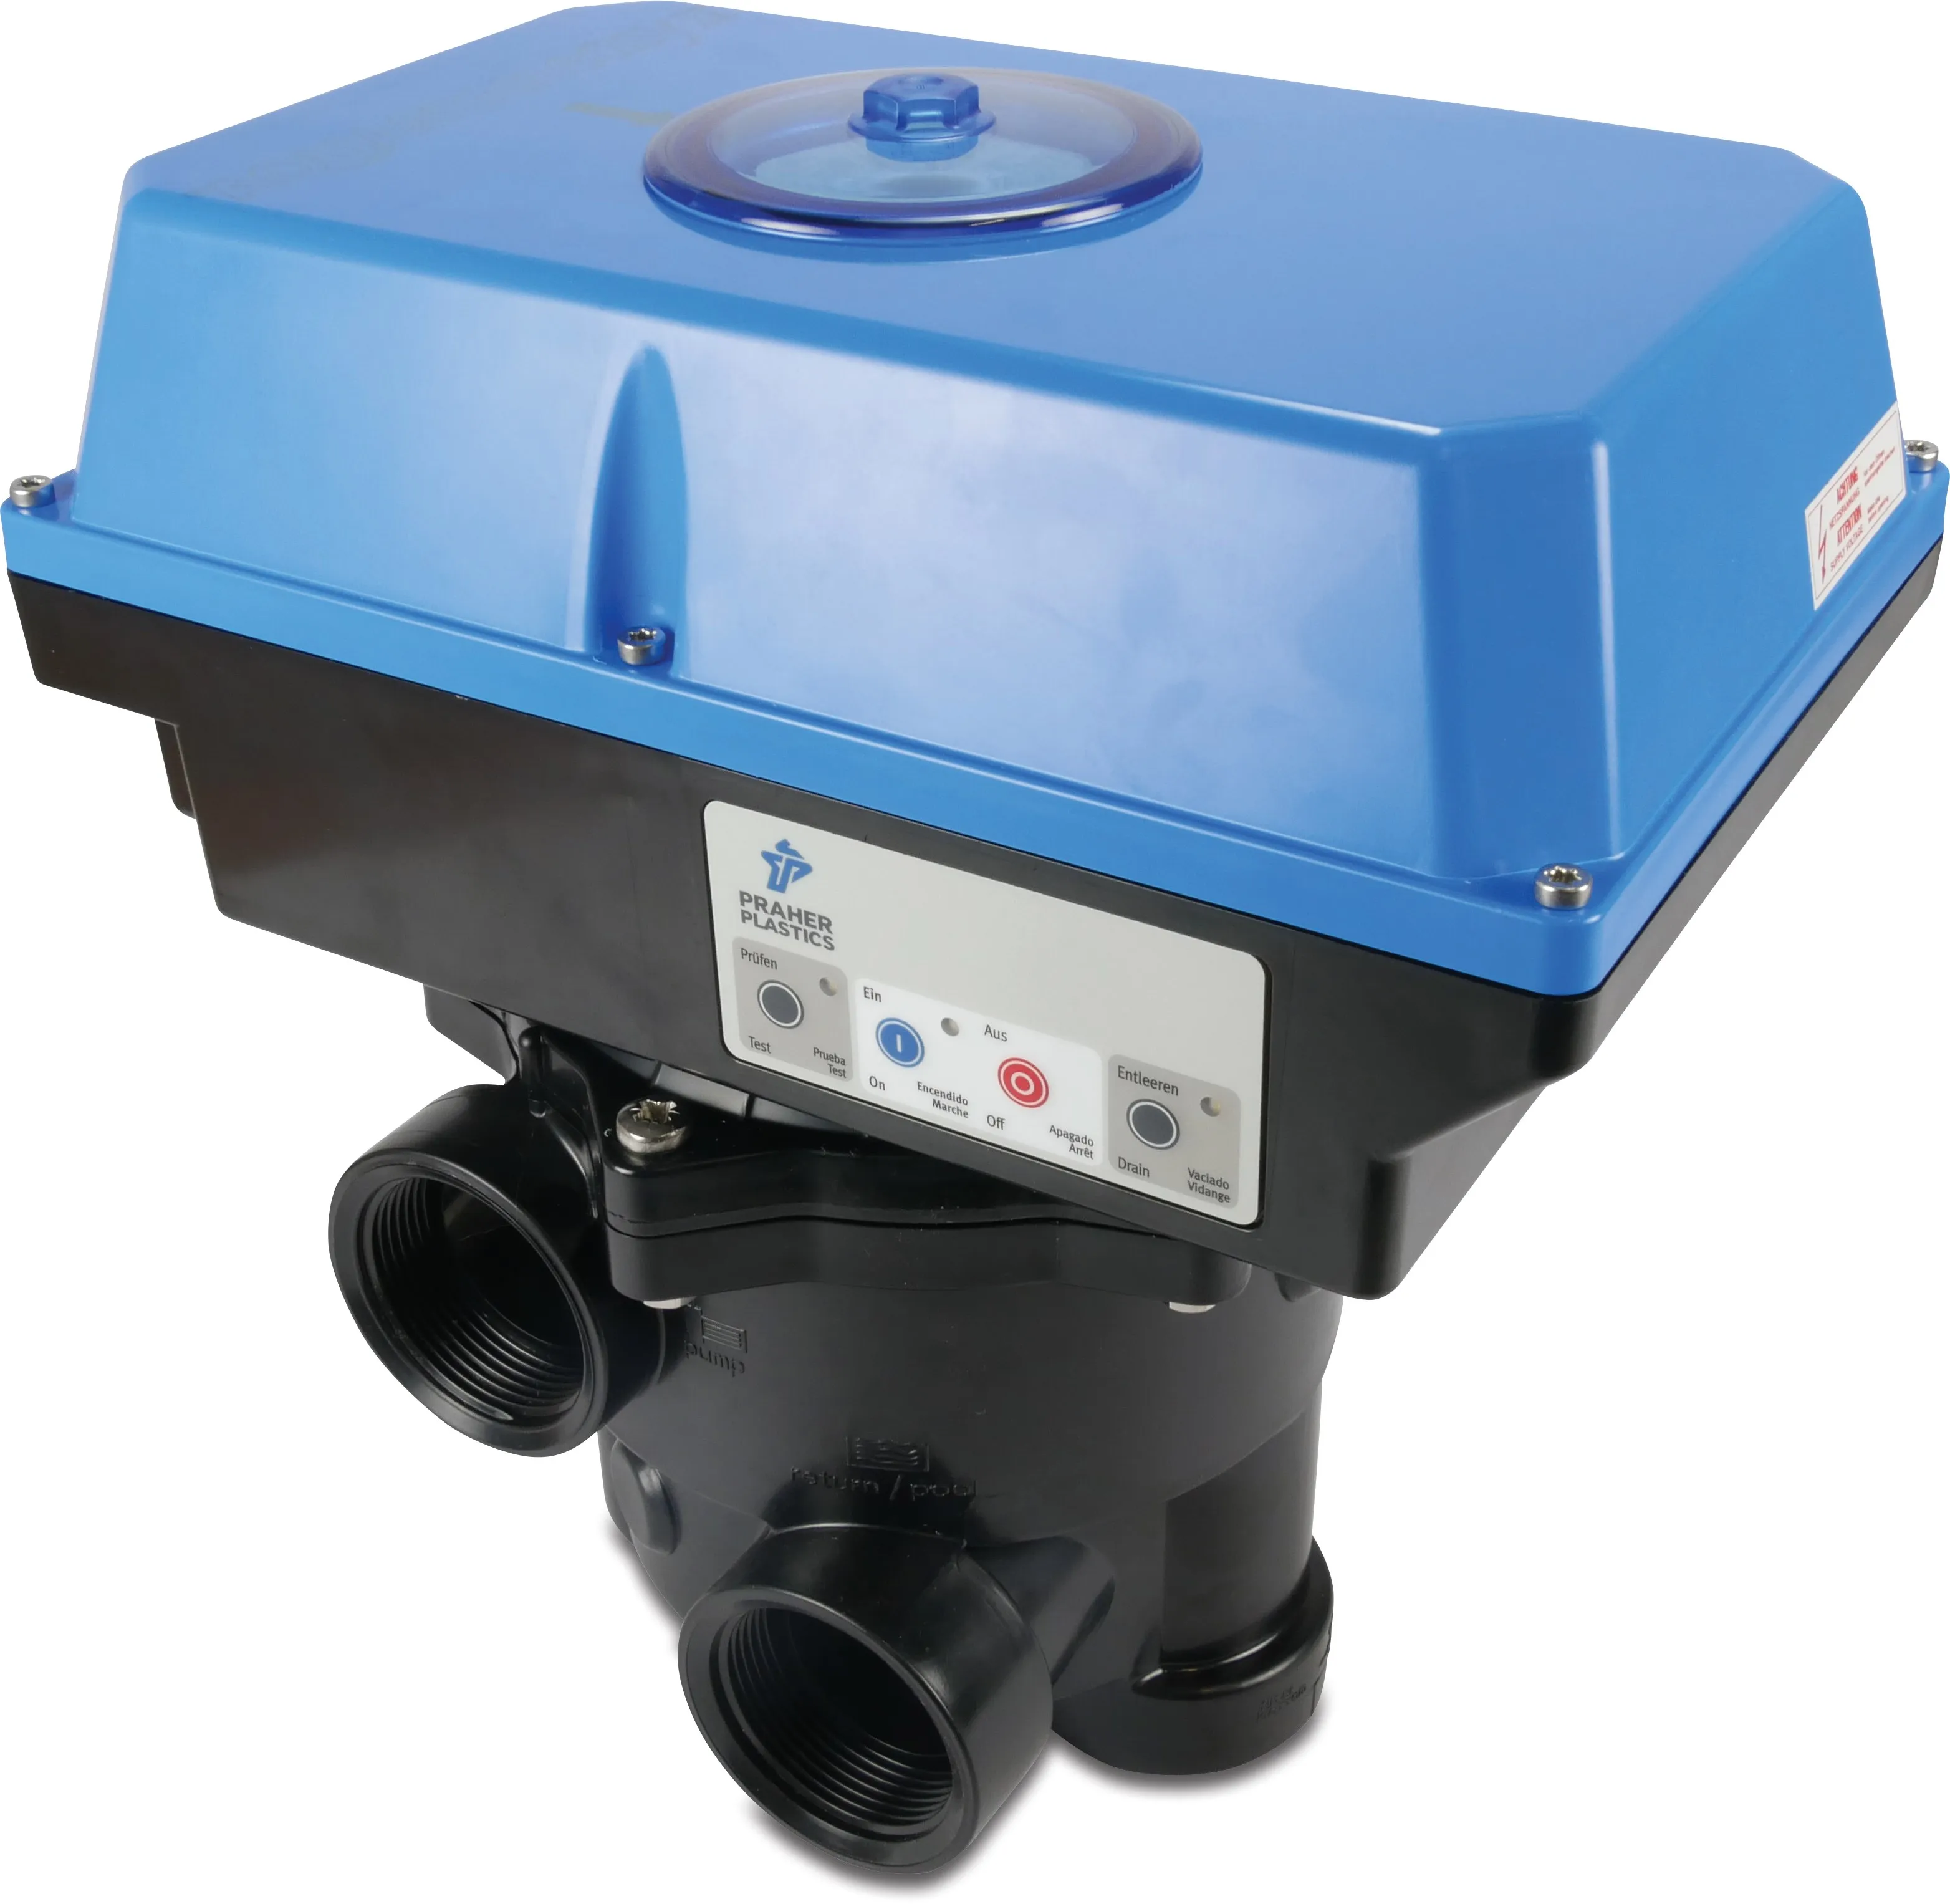 Automatic backwash valve type Aquastar Easy II